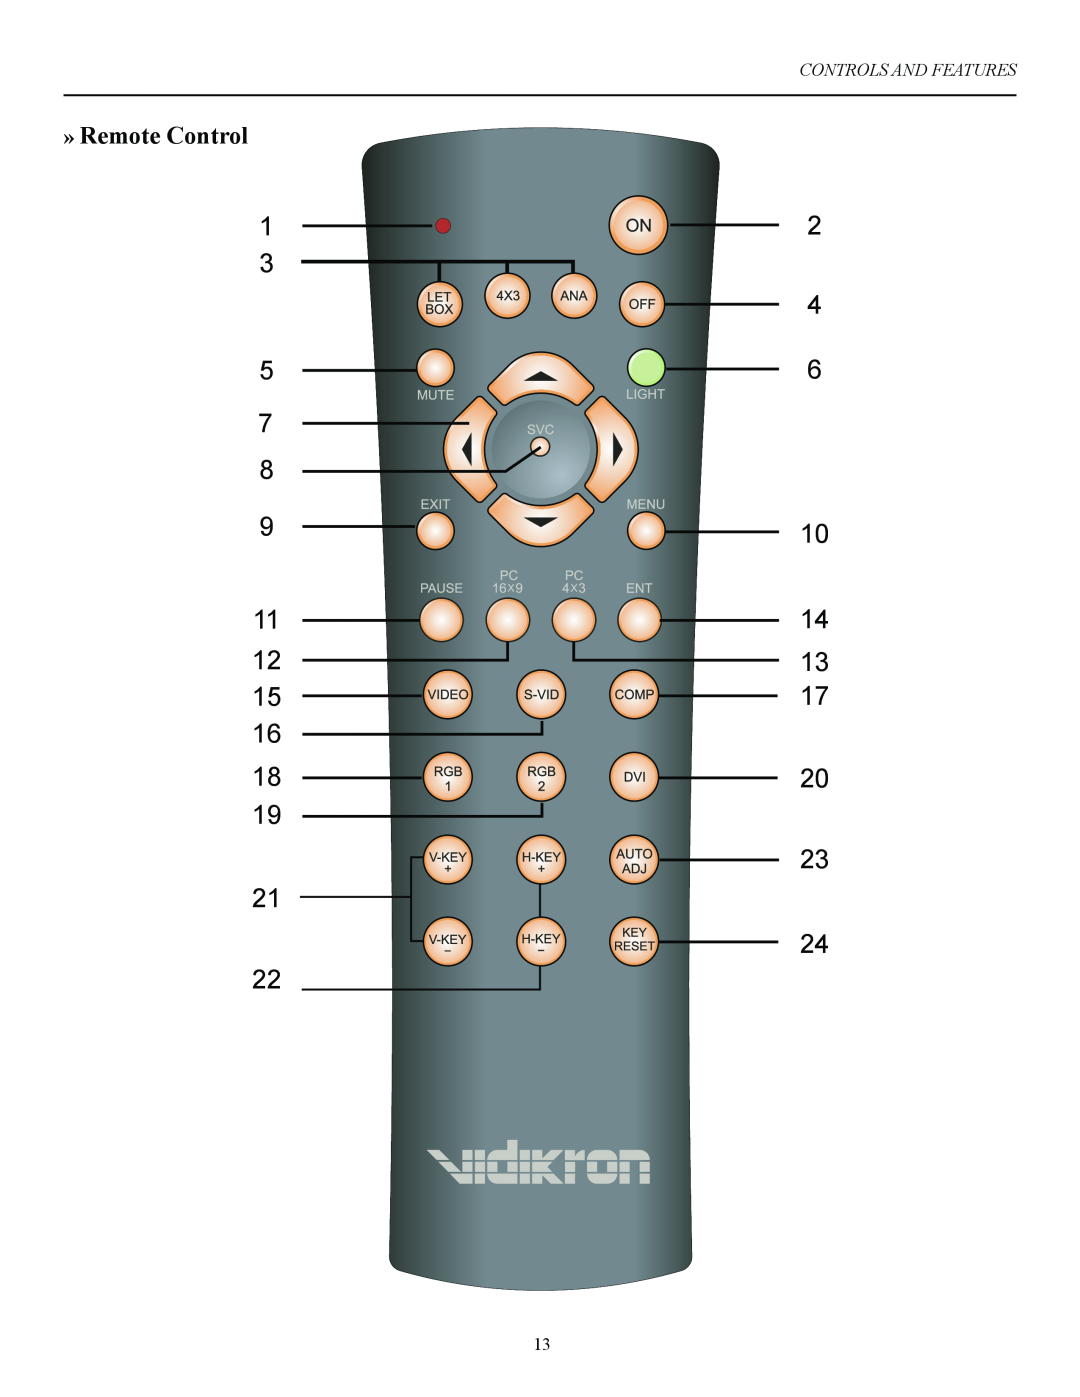 Vidikron 60 manual » Remote Control, Controls And Features 